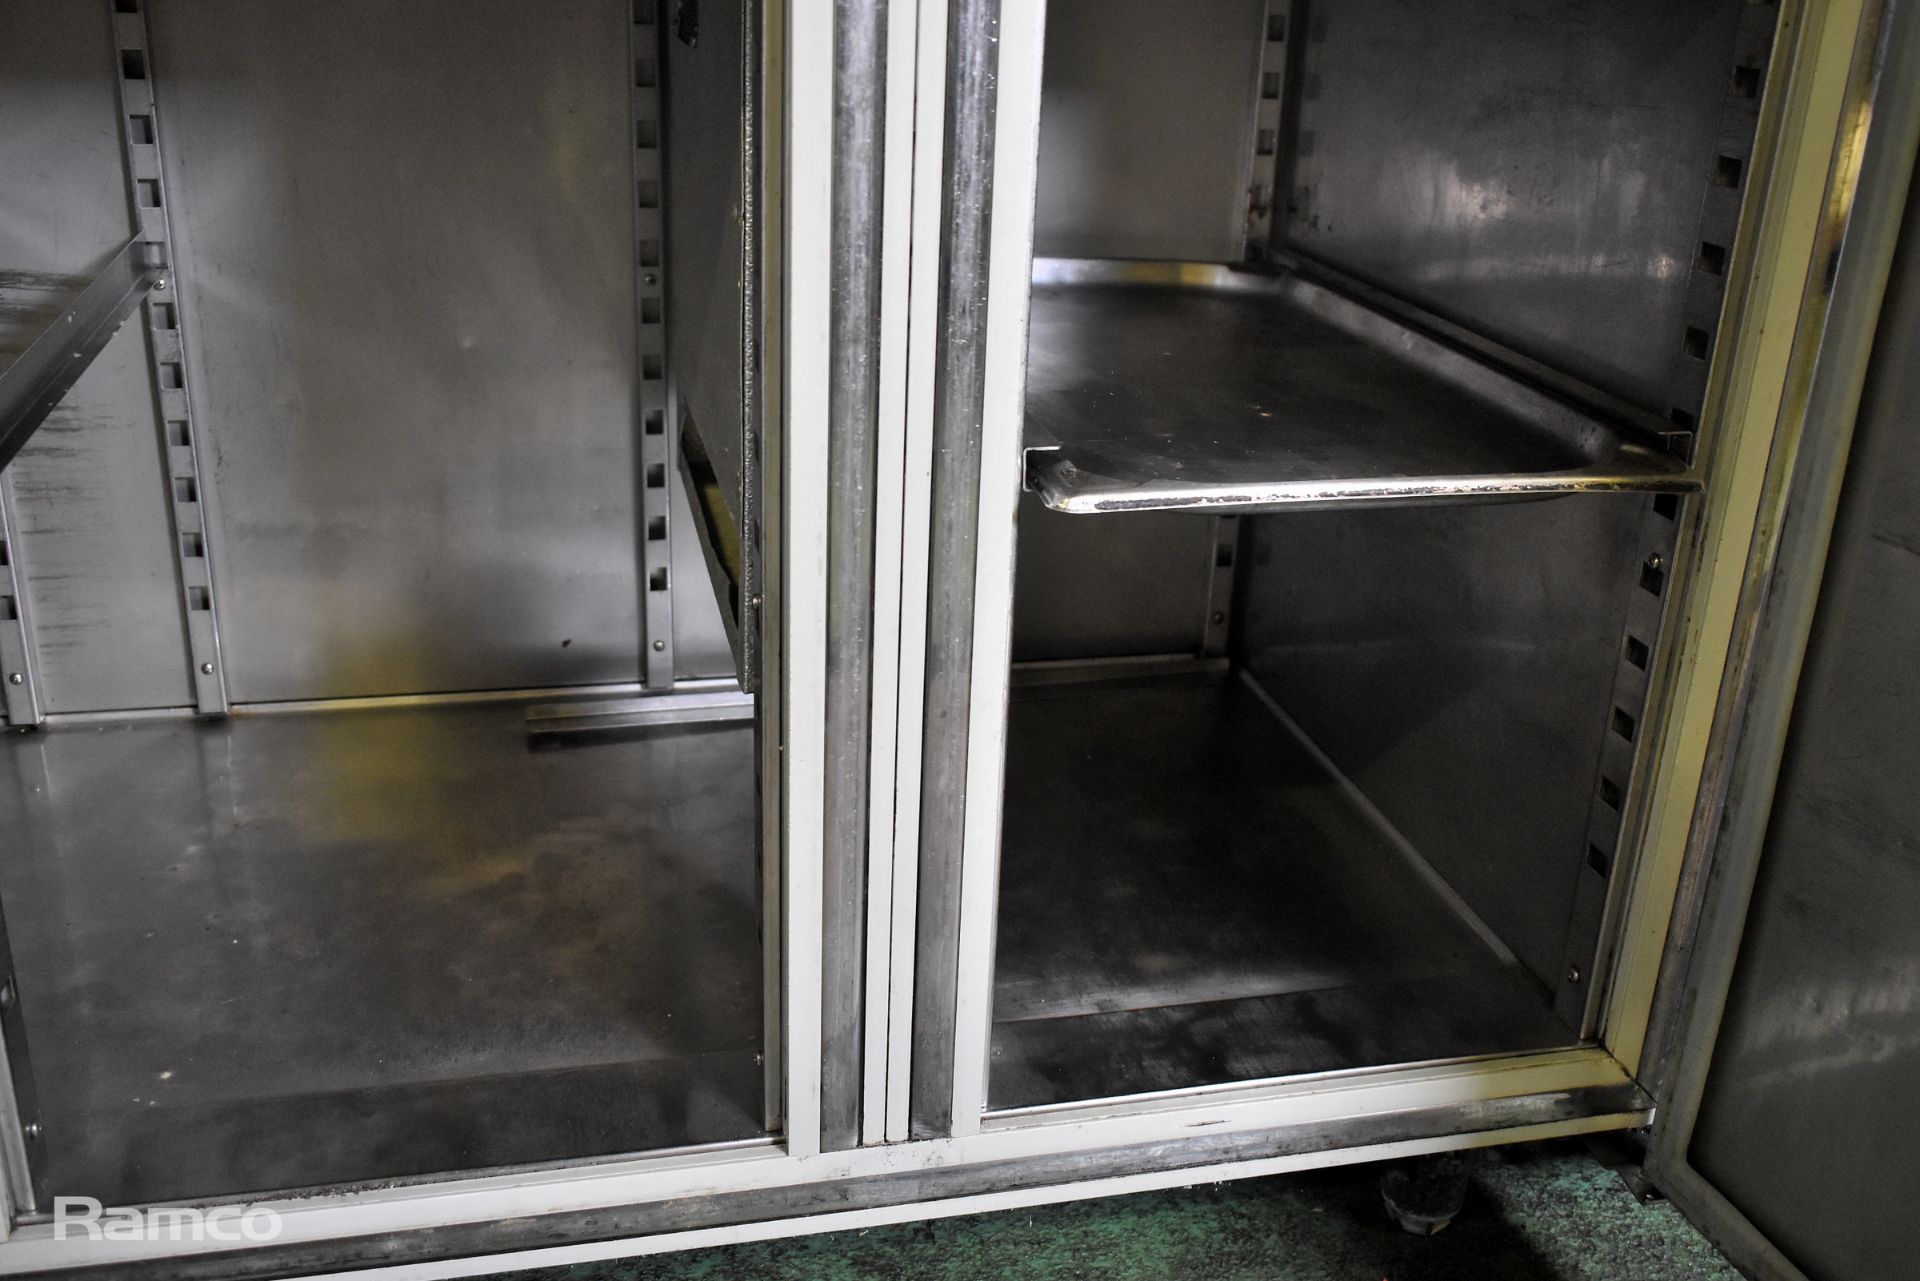 Inomak PN999/N stainless steel triple door counter fridge - W 1800 x D 700 x H 860mm - Image 3 of 5